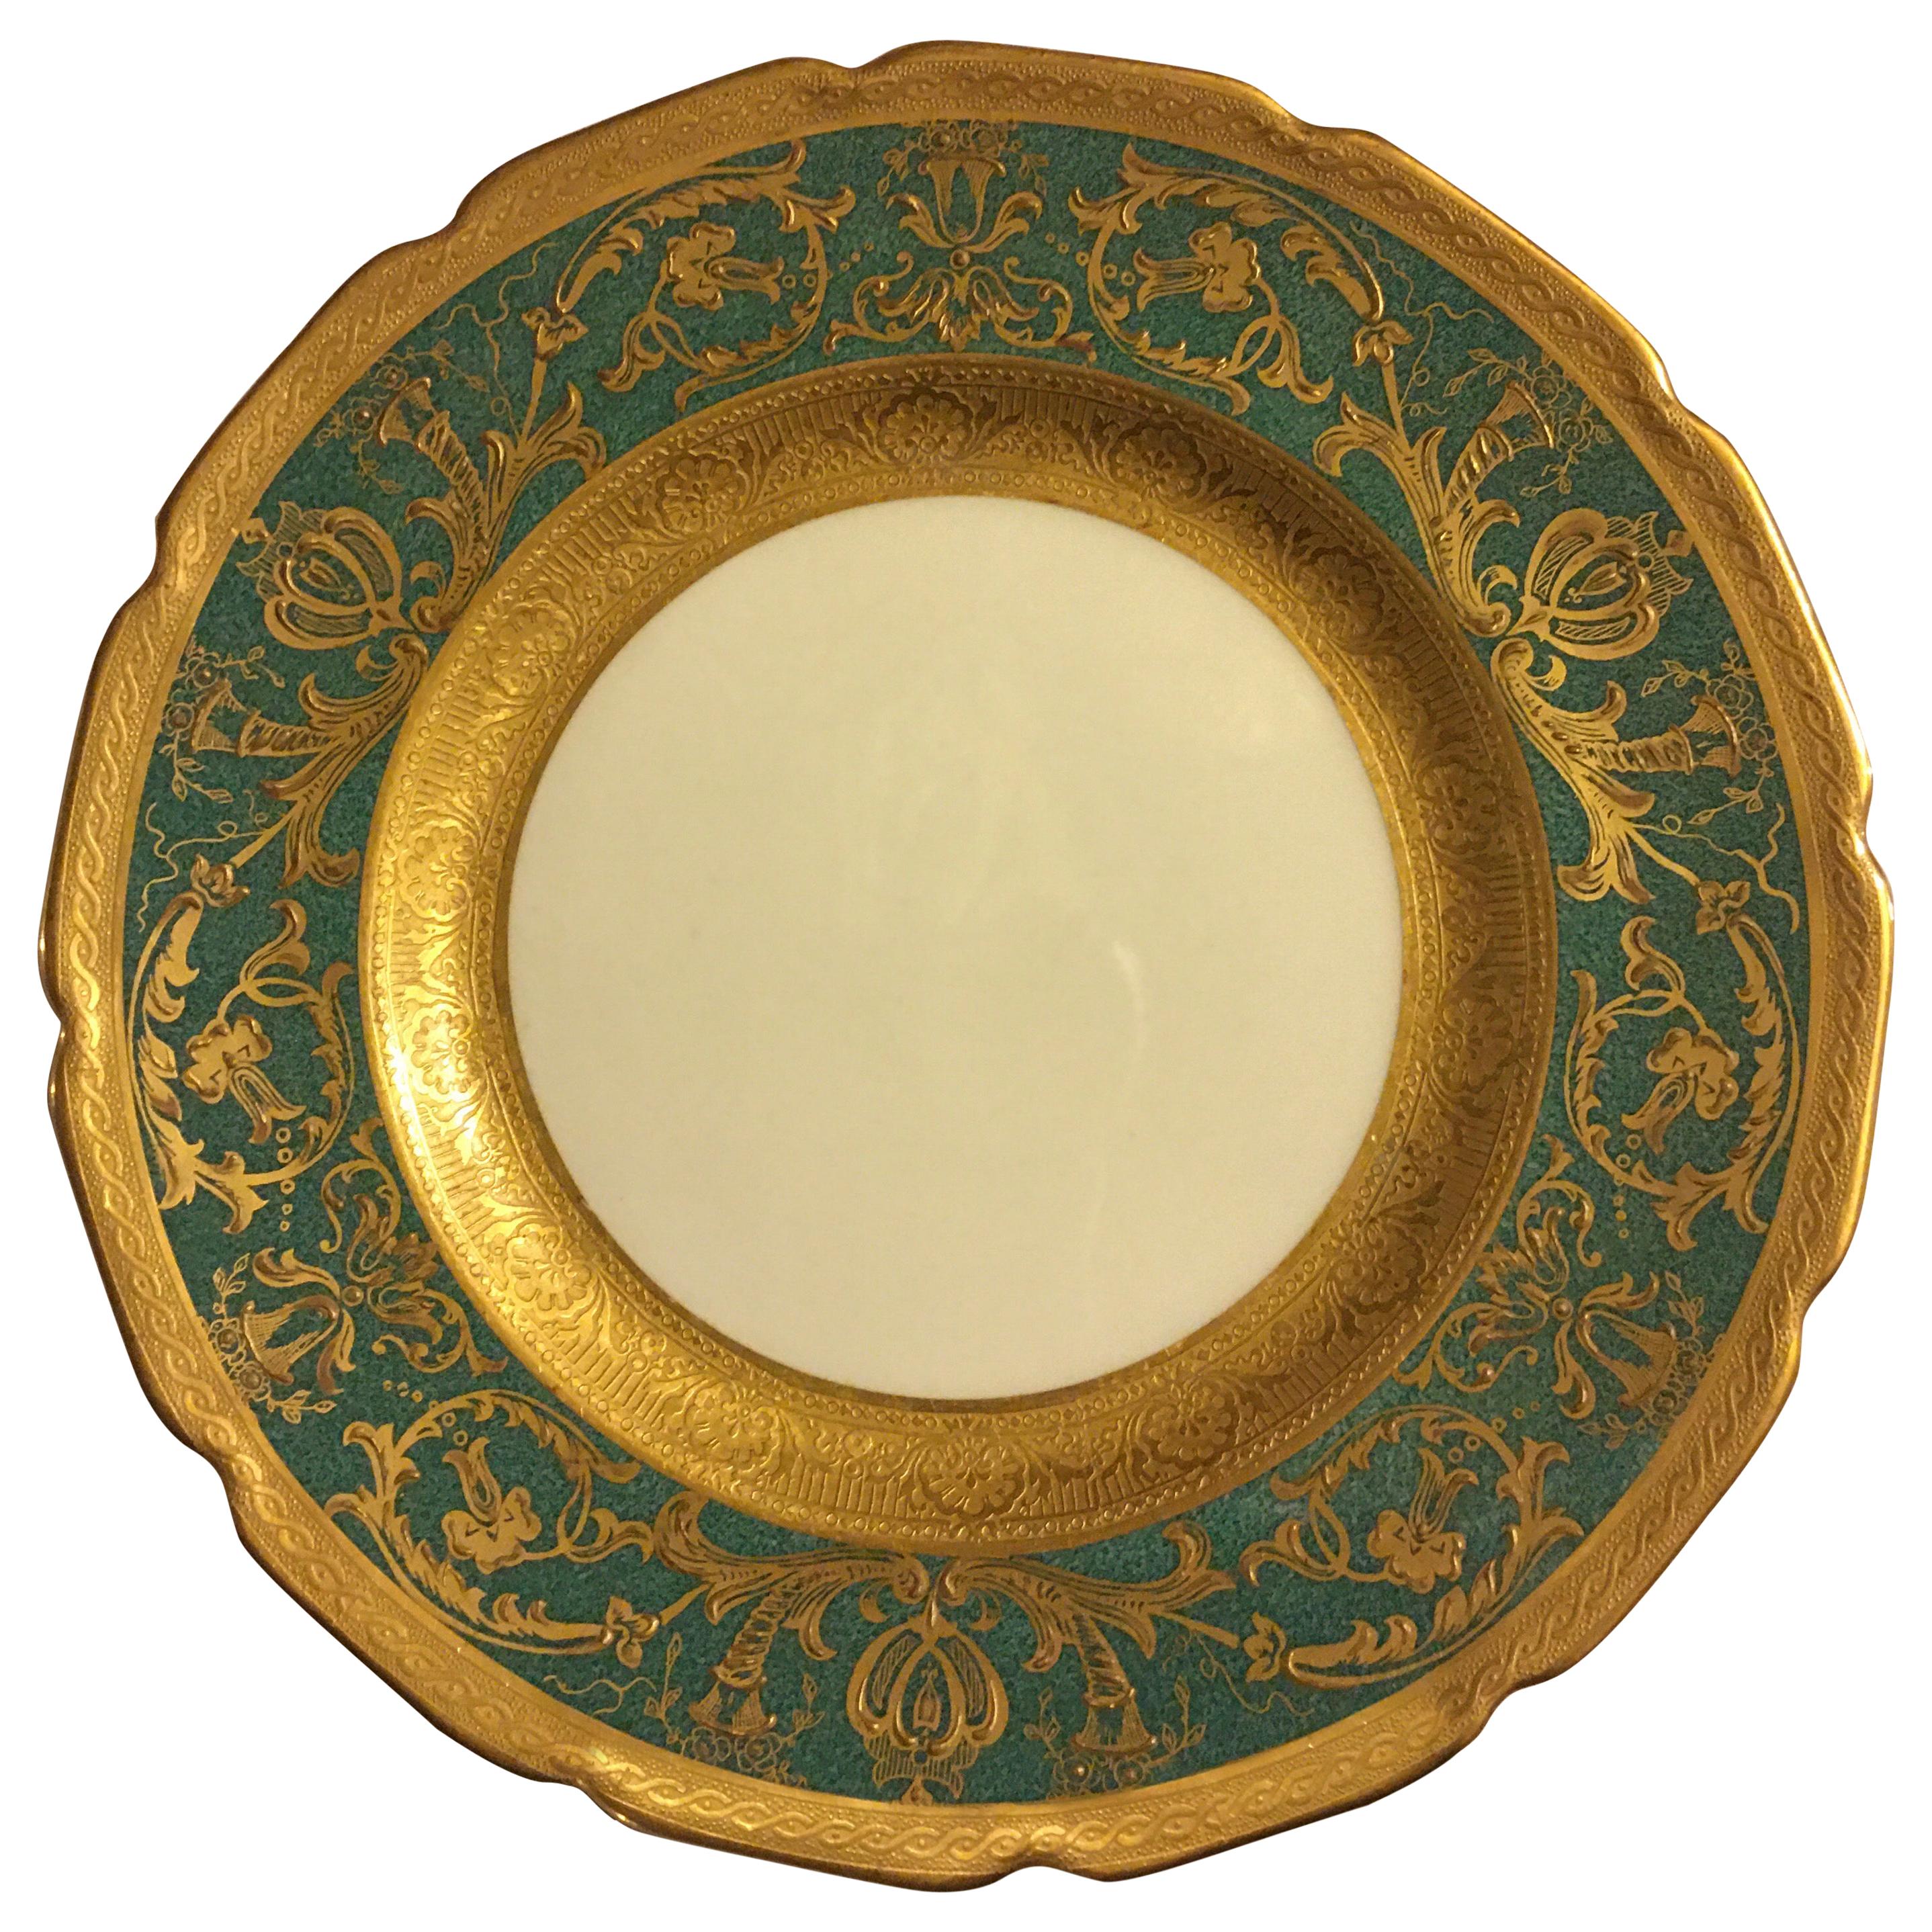 Ovington’s New York Gold Encrusted Royal Doulton Teal on White Dessert Plates For Sale